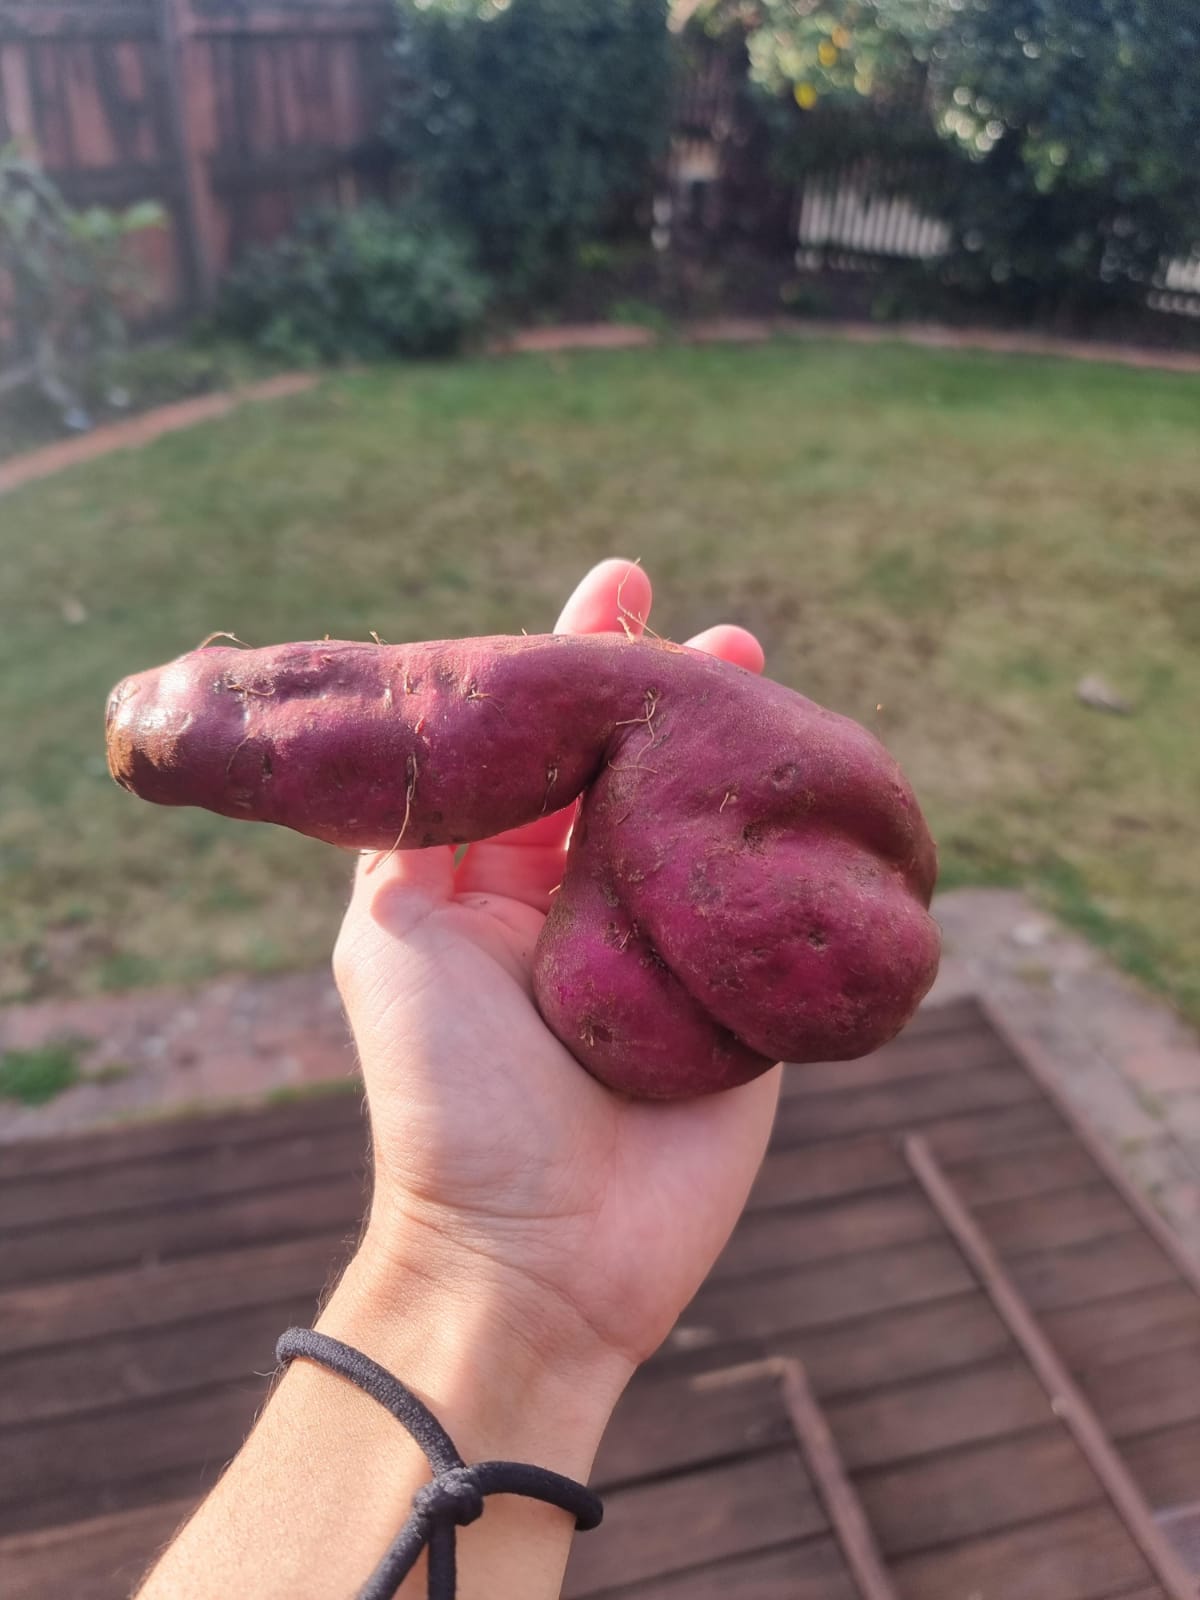 Potato penis